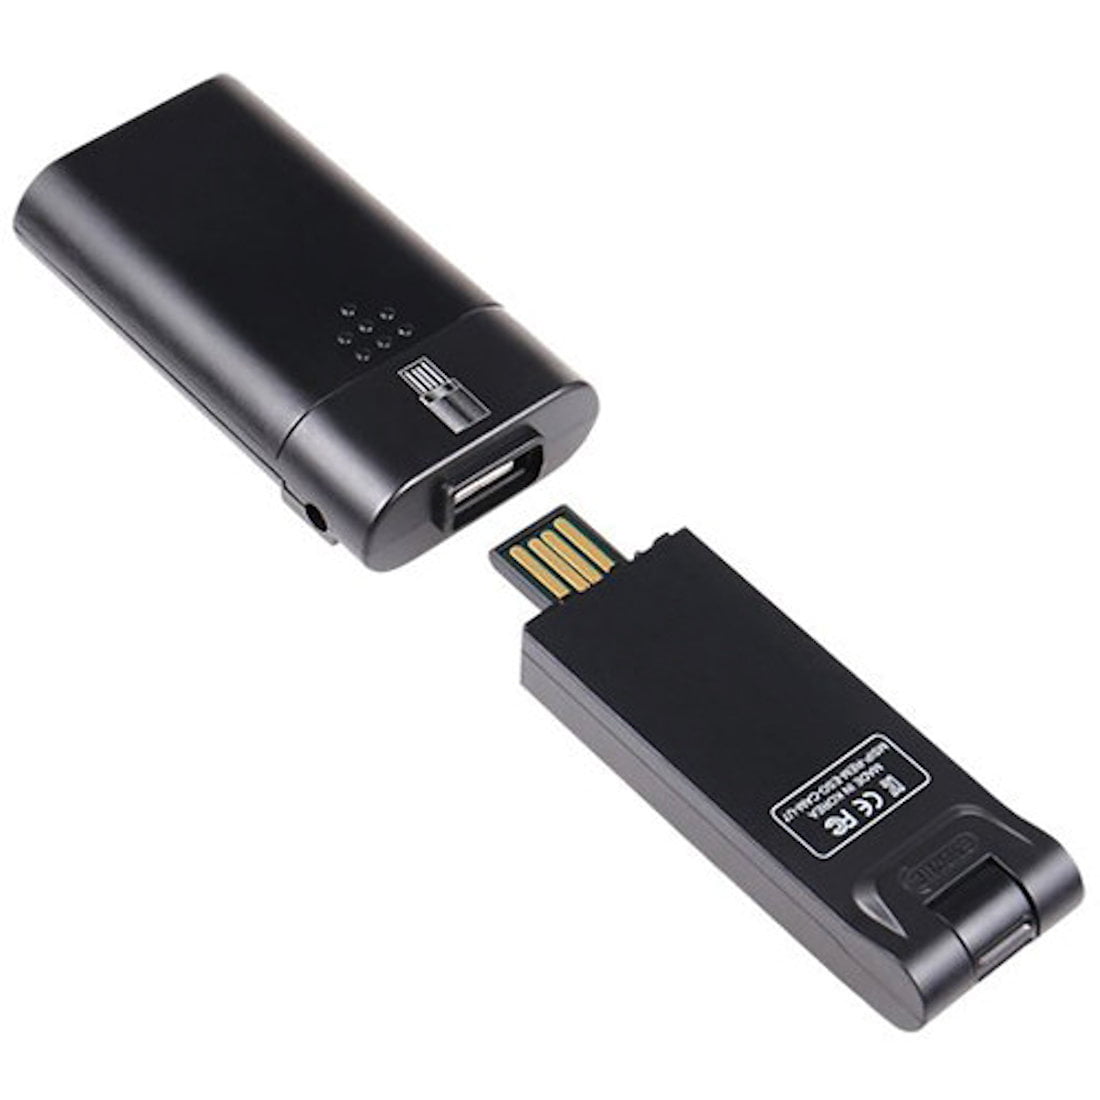 DVR707 USB Stick style HD DVR with Hidden Camera KJB Products USB Port